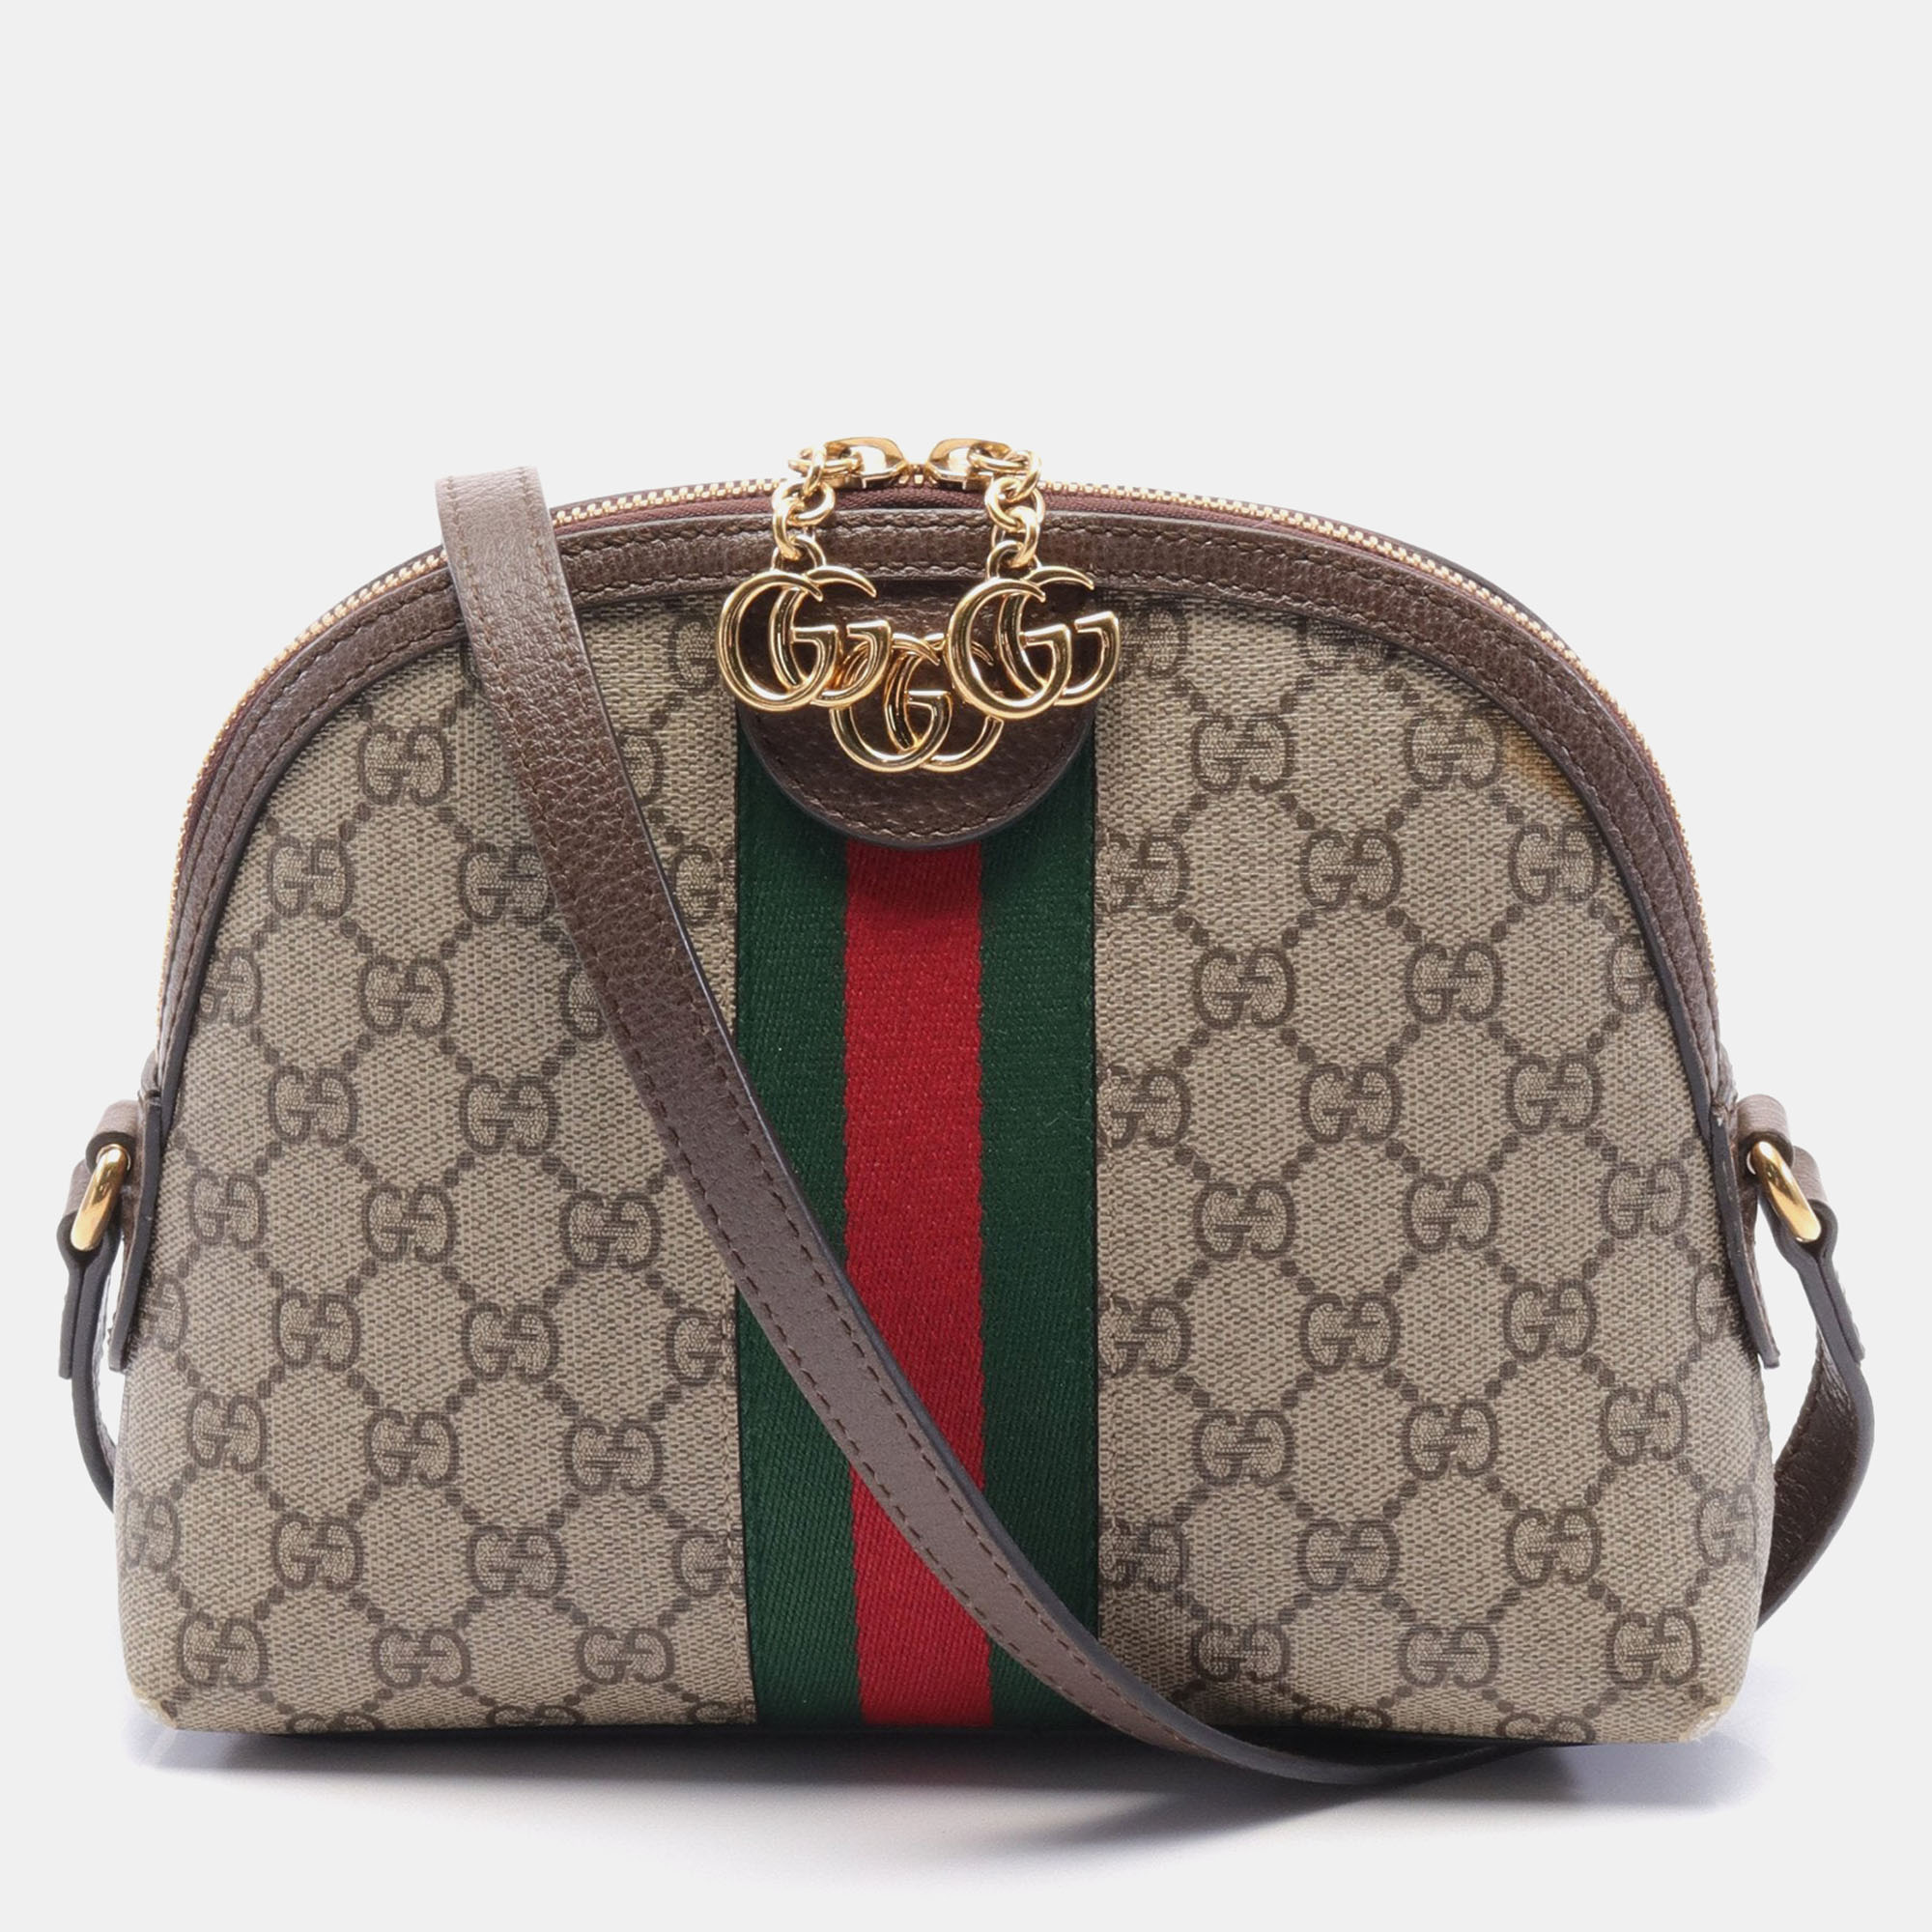 Pre-owned Gucci Ophidia Gg Supreme Shoulder Bag Pvc Leather Beige Dark Brown Multicolor